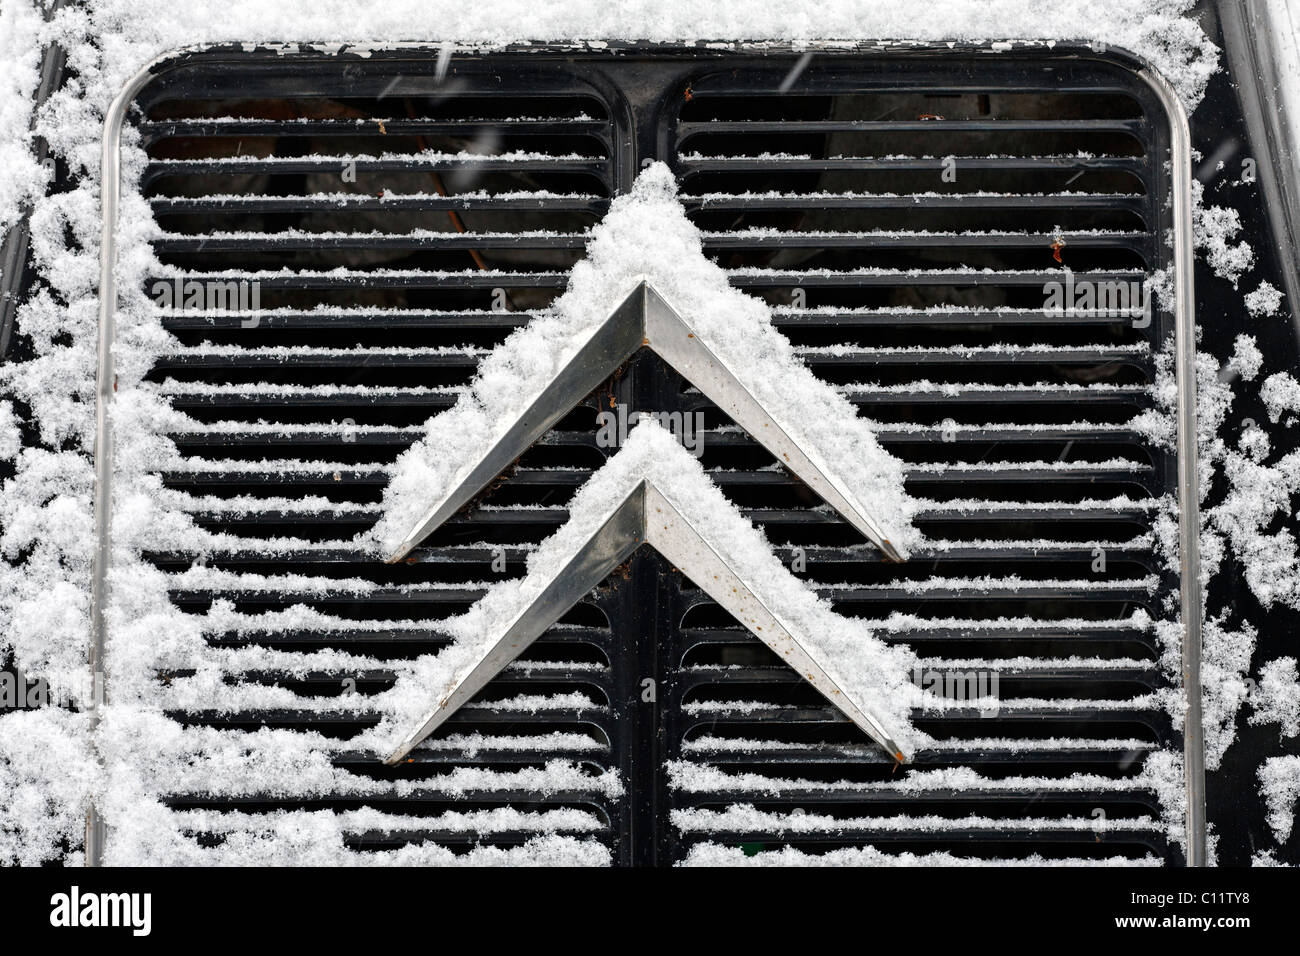 Logo on the radiator of a Citroen van, vintage cars, snow Stock Photo